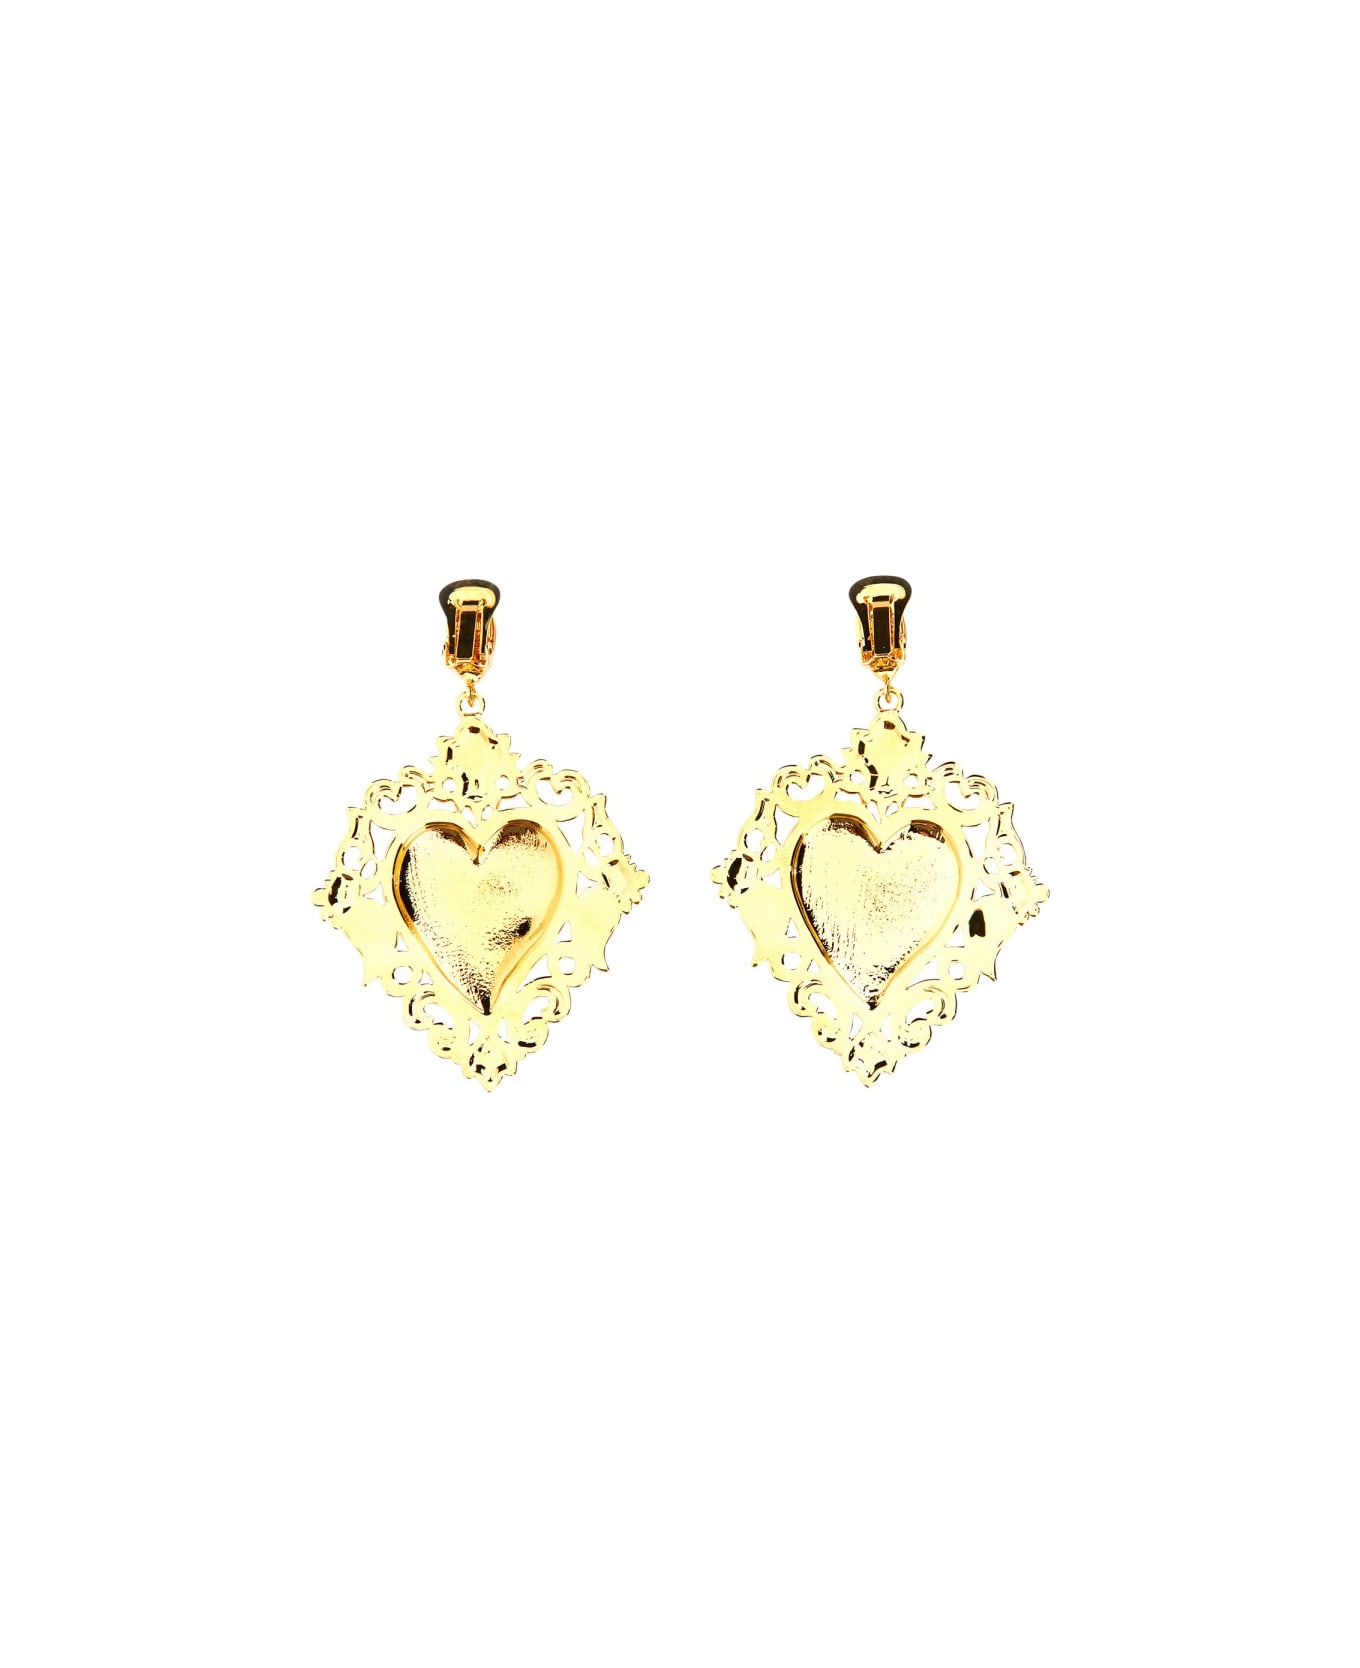 Moschino "gold Heart" Earrings - GOLD